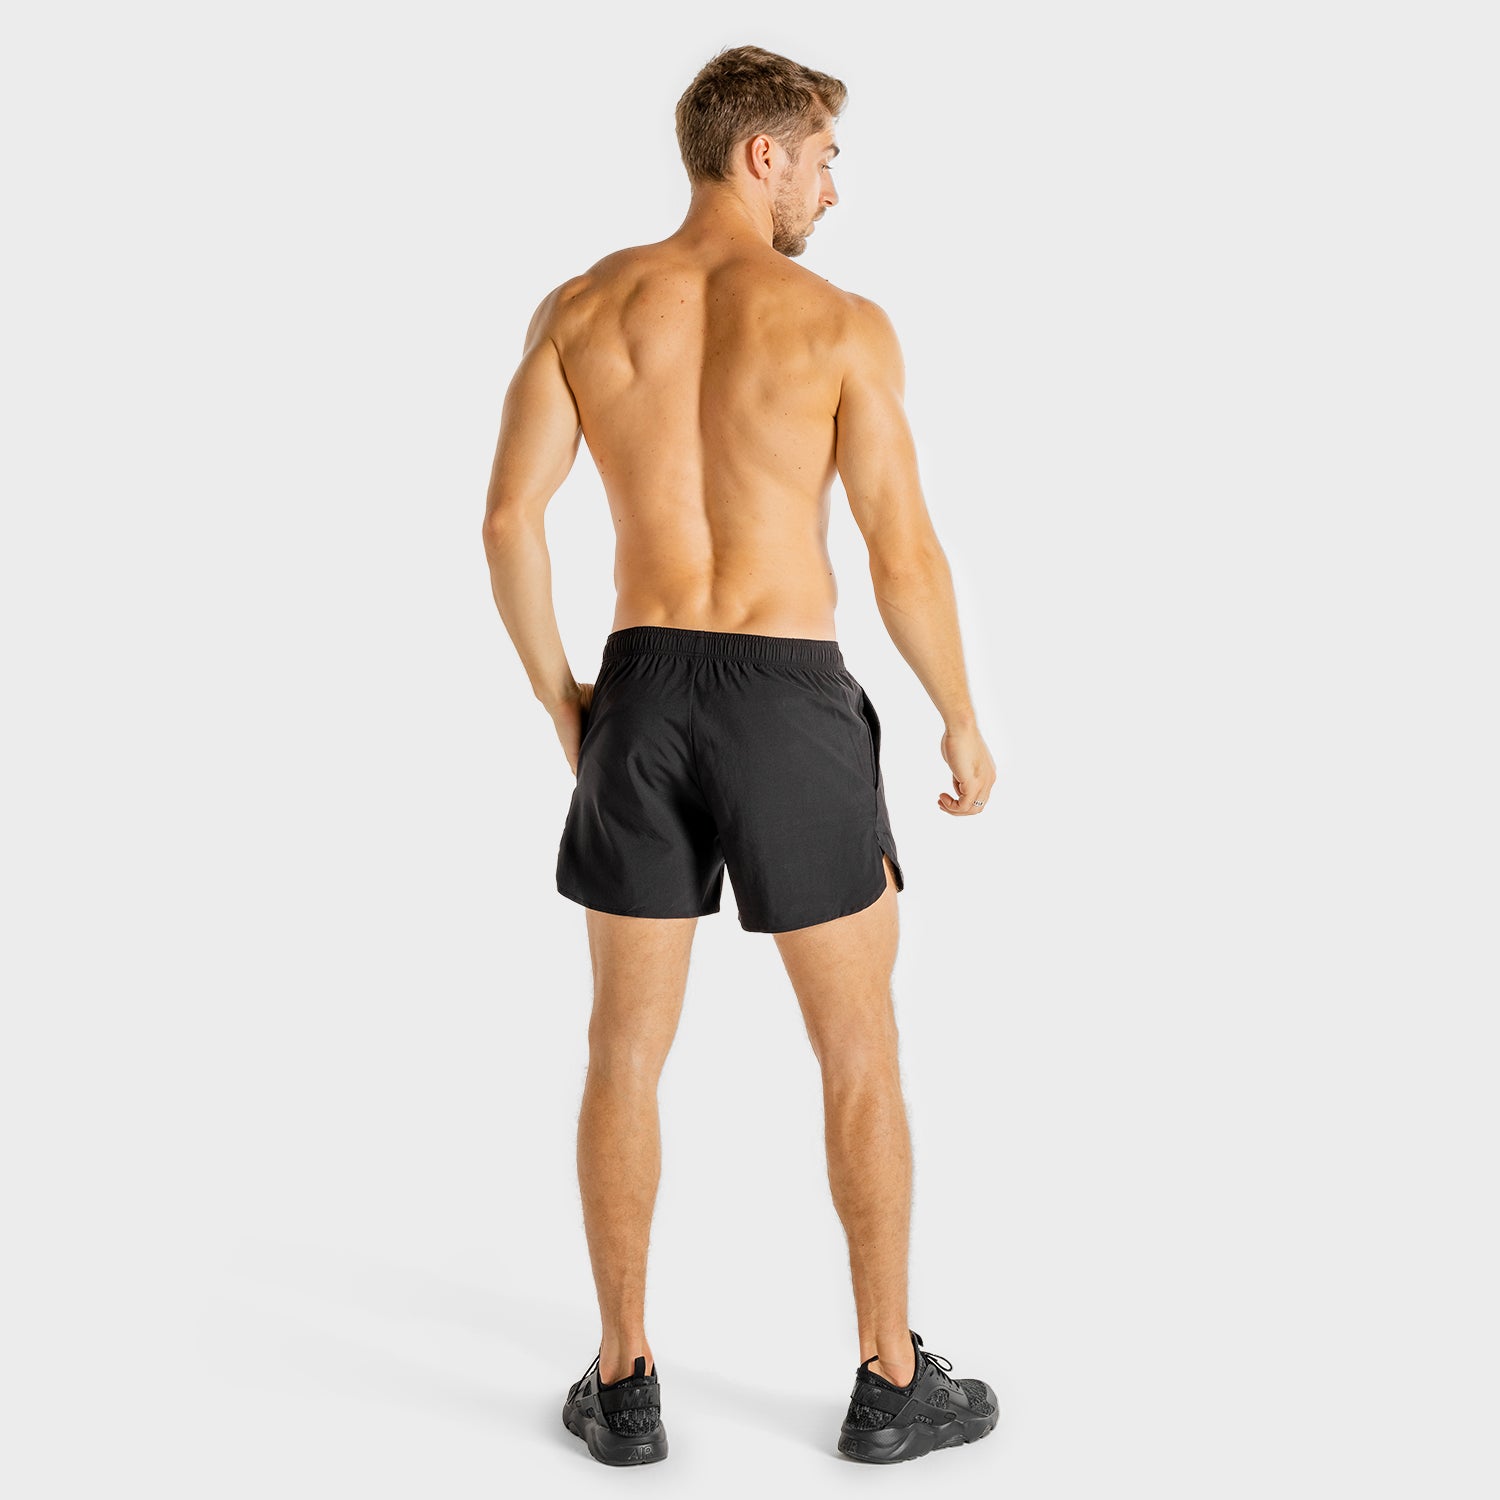 squatwolf-workout-short-for-men-core-shorts-onyx-gym-wear